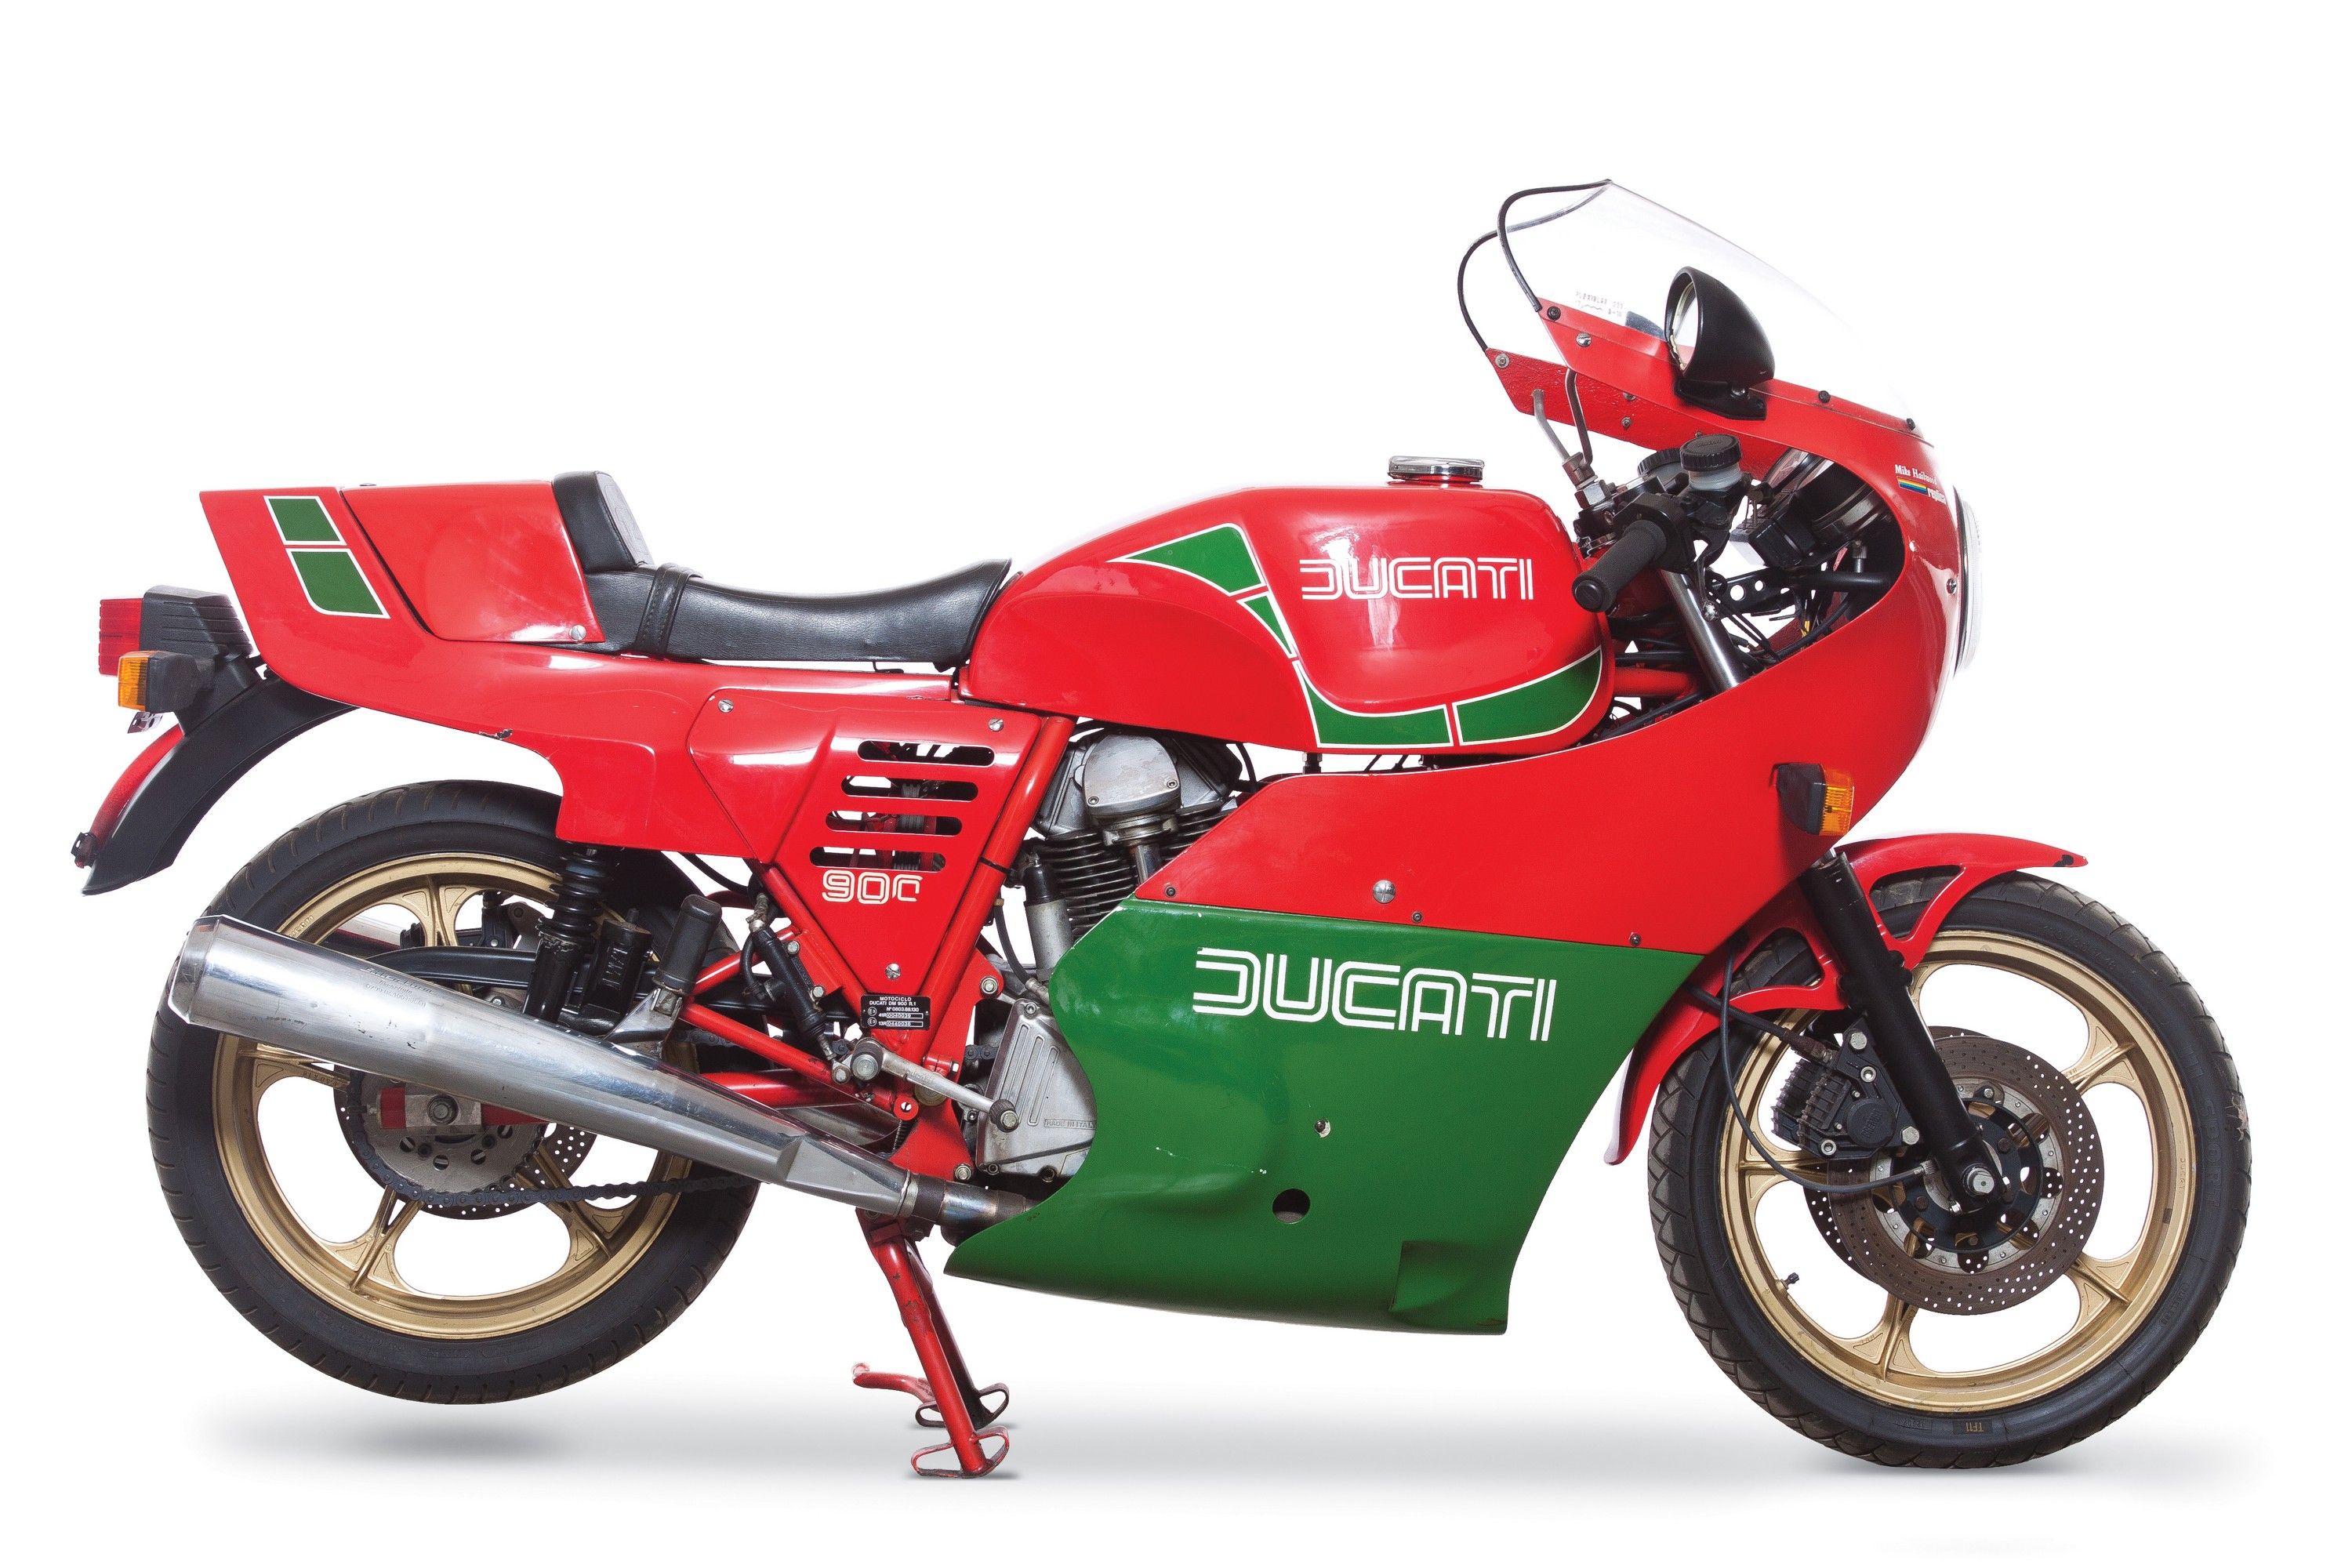 1983 Ducati 900 Mike Hailwood Replica